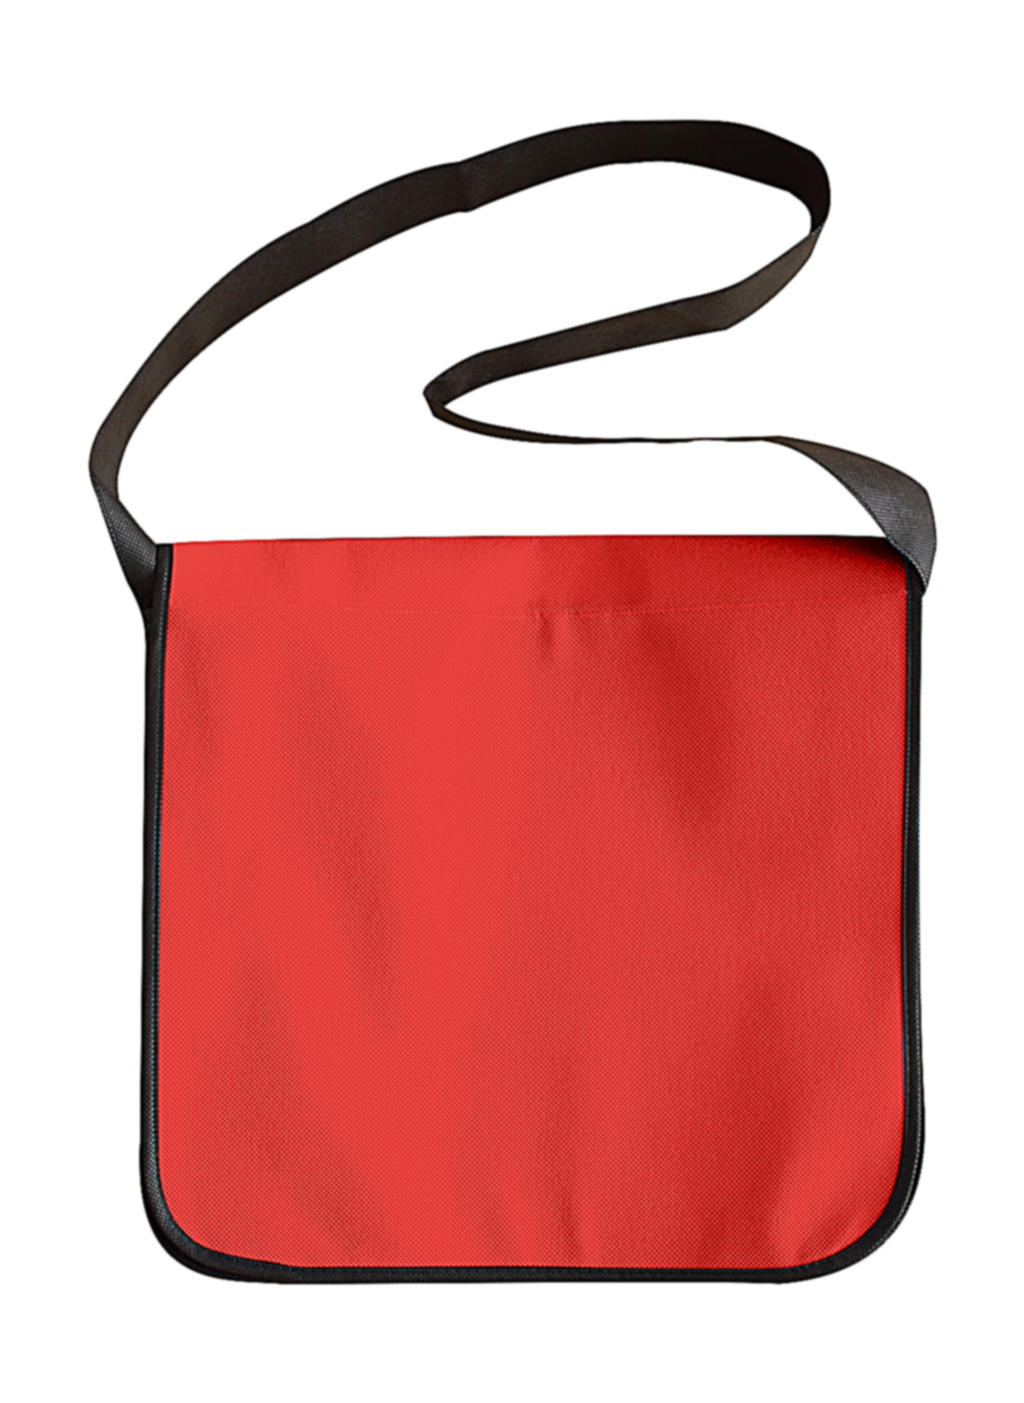  Messenger Bag in Farbe Red/Black